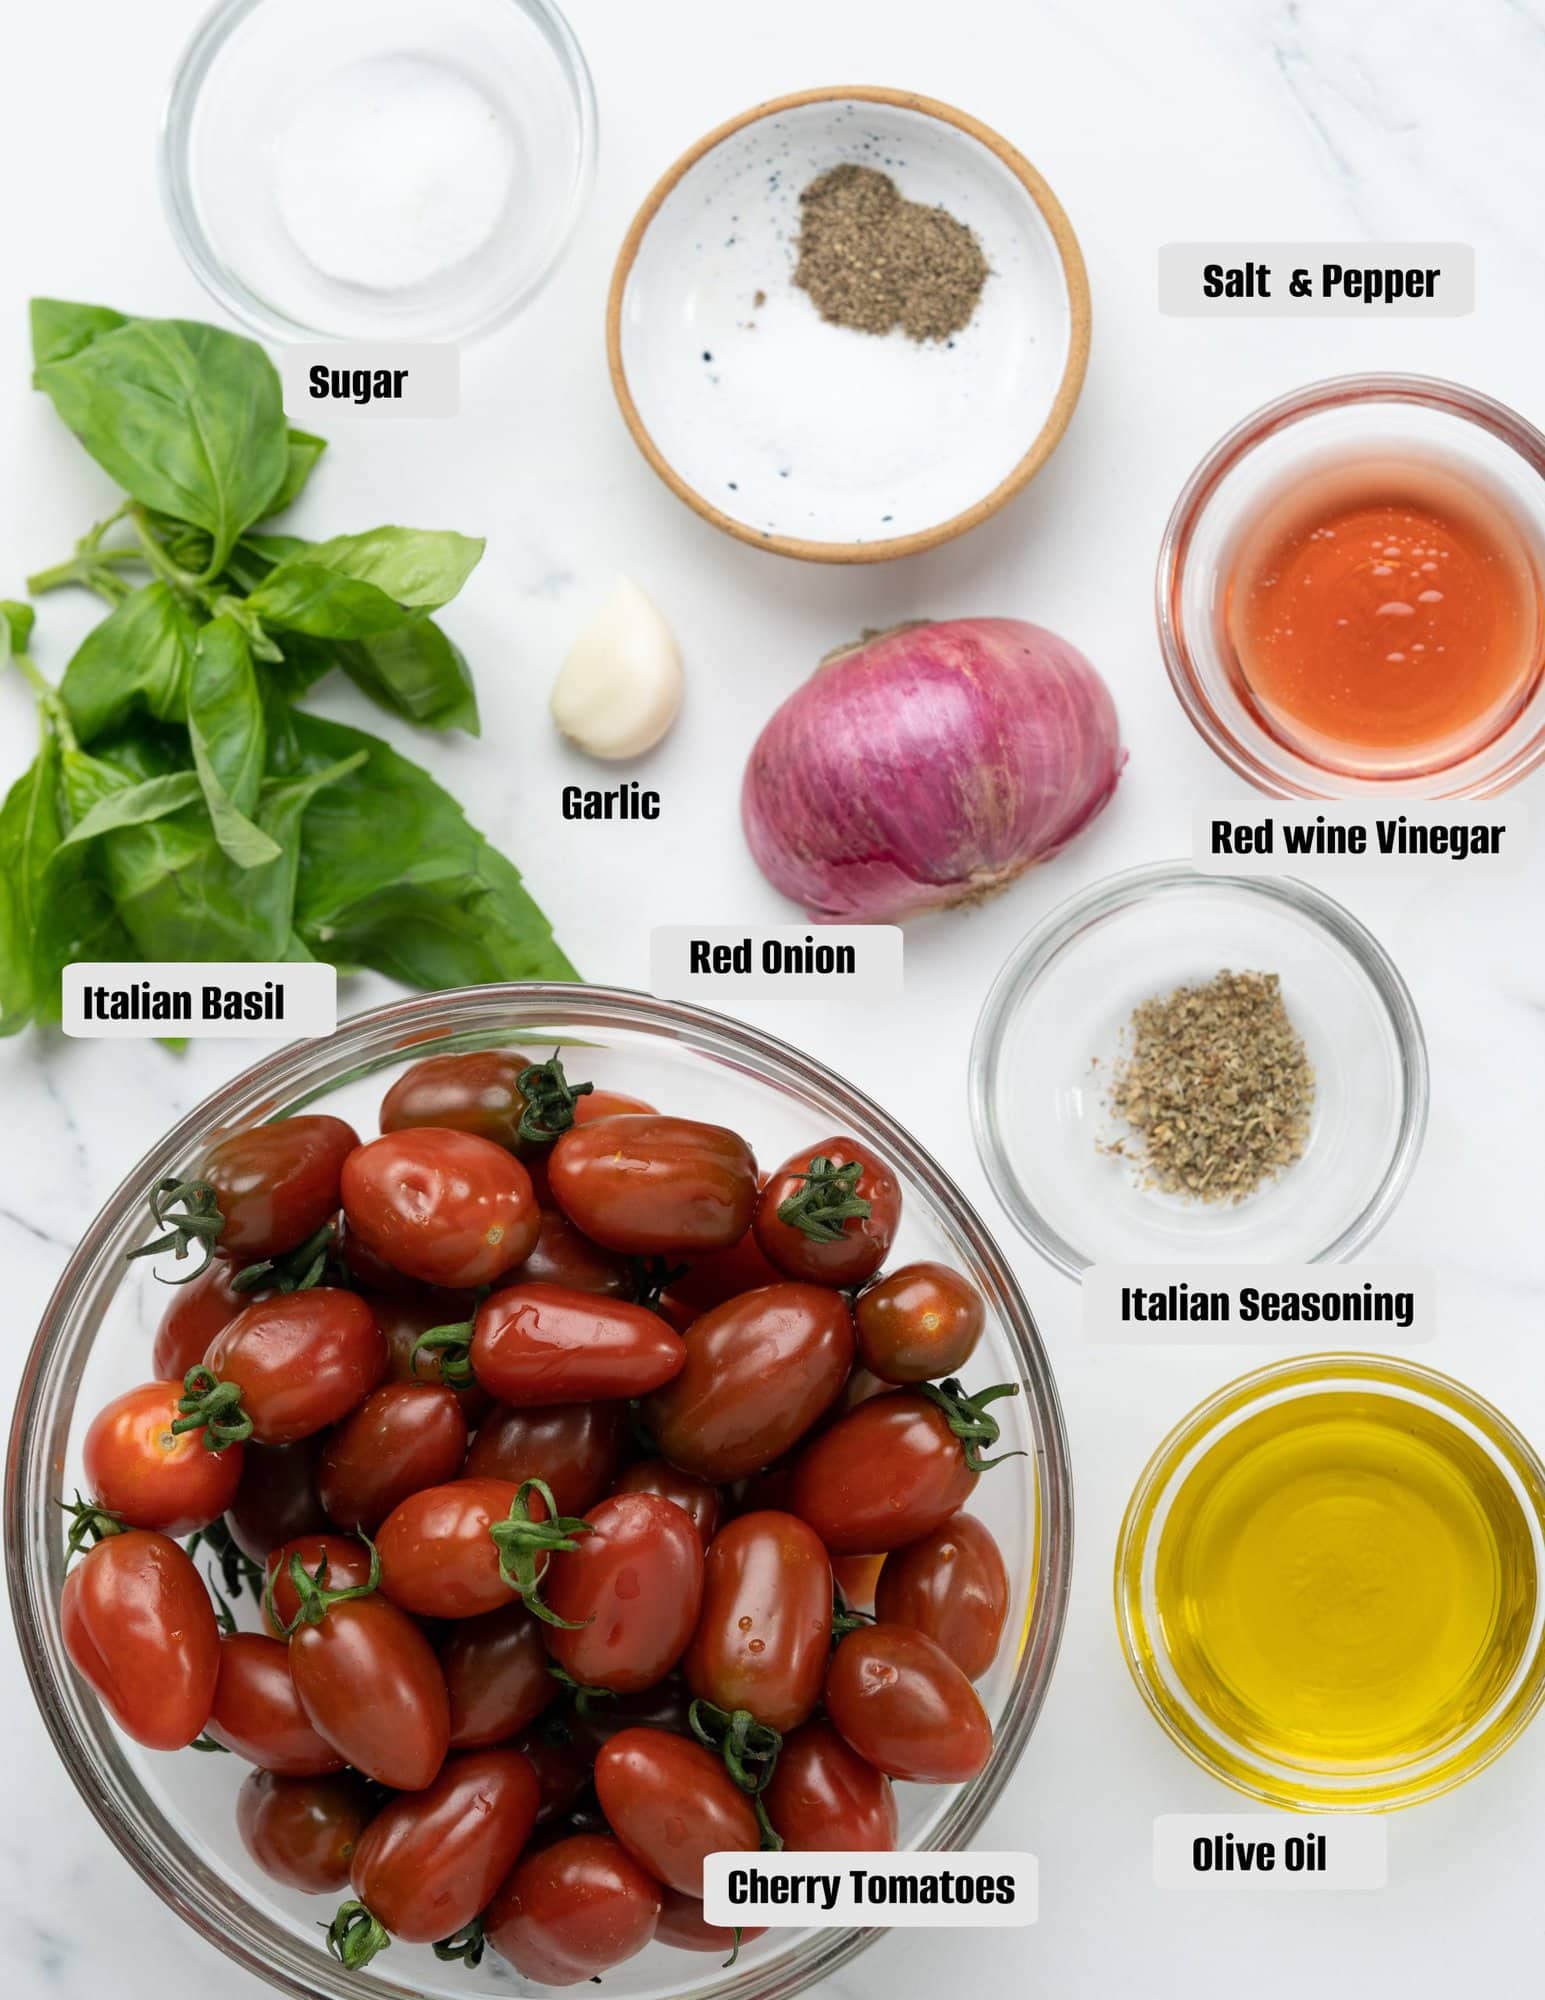 Ingredients for cherry tomato salad : cherry tomatoes,olive oil,Italian Seasoning,Italian basil,red onion,garlic,red wine vinegar,sugar,salt& pepper